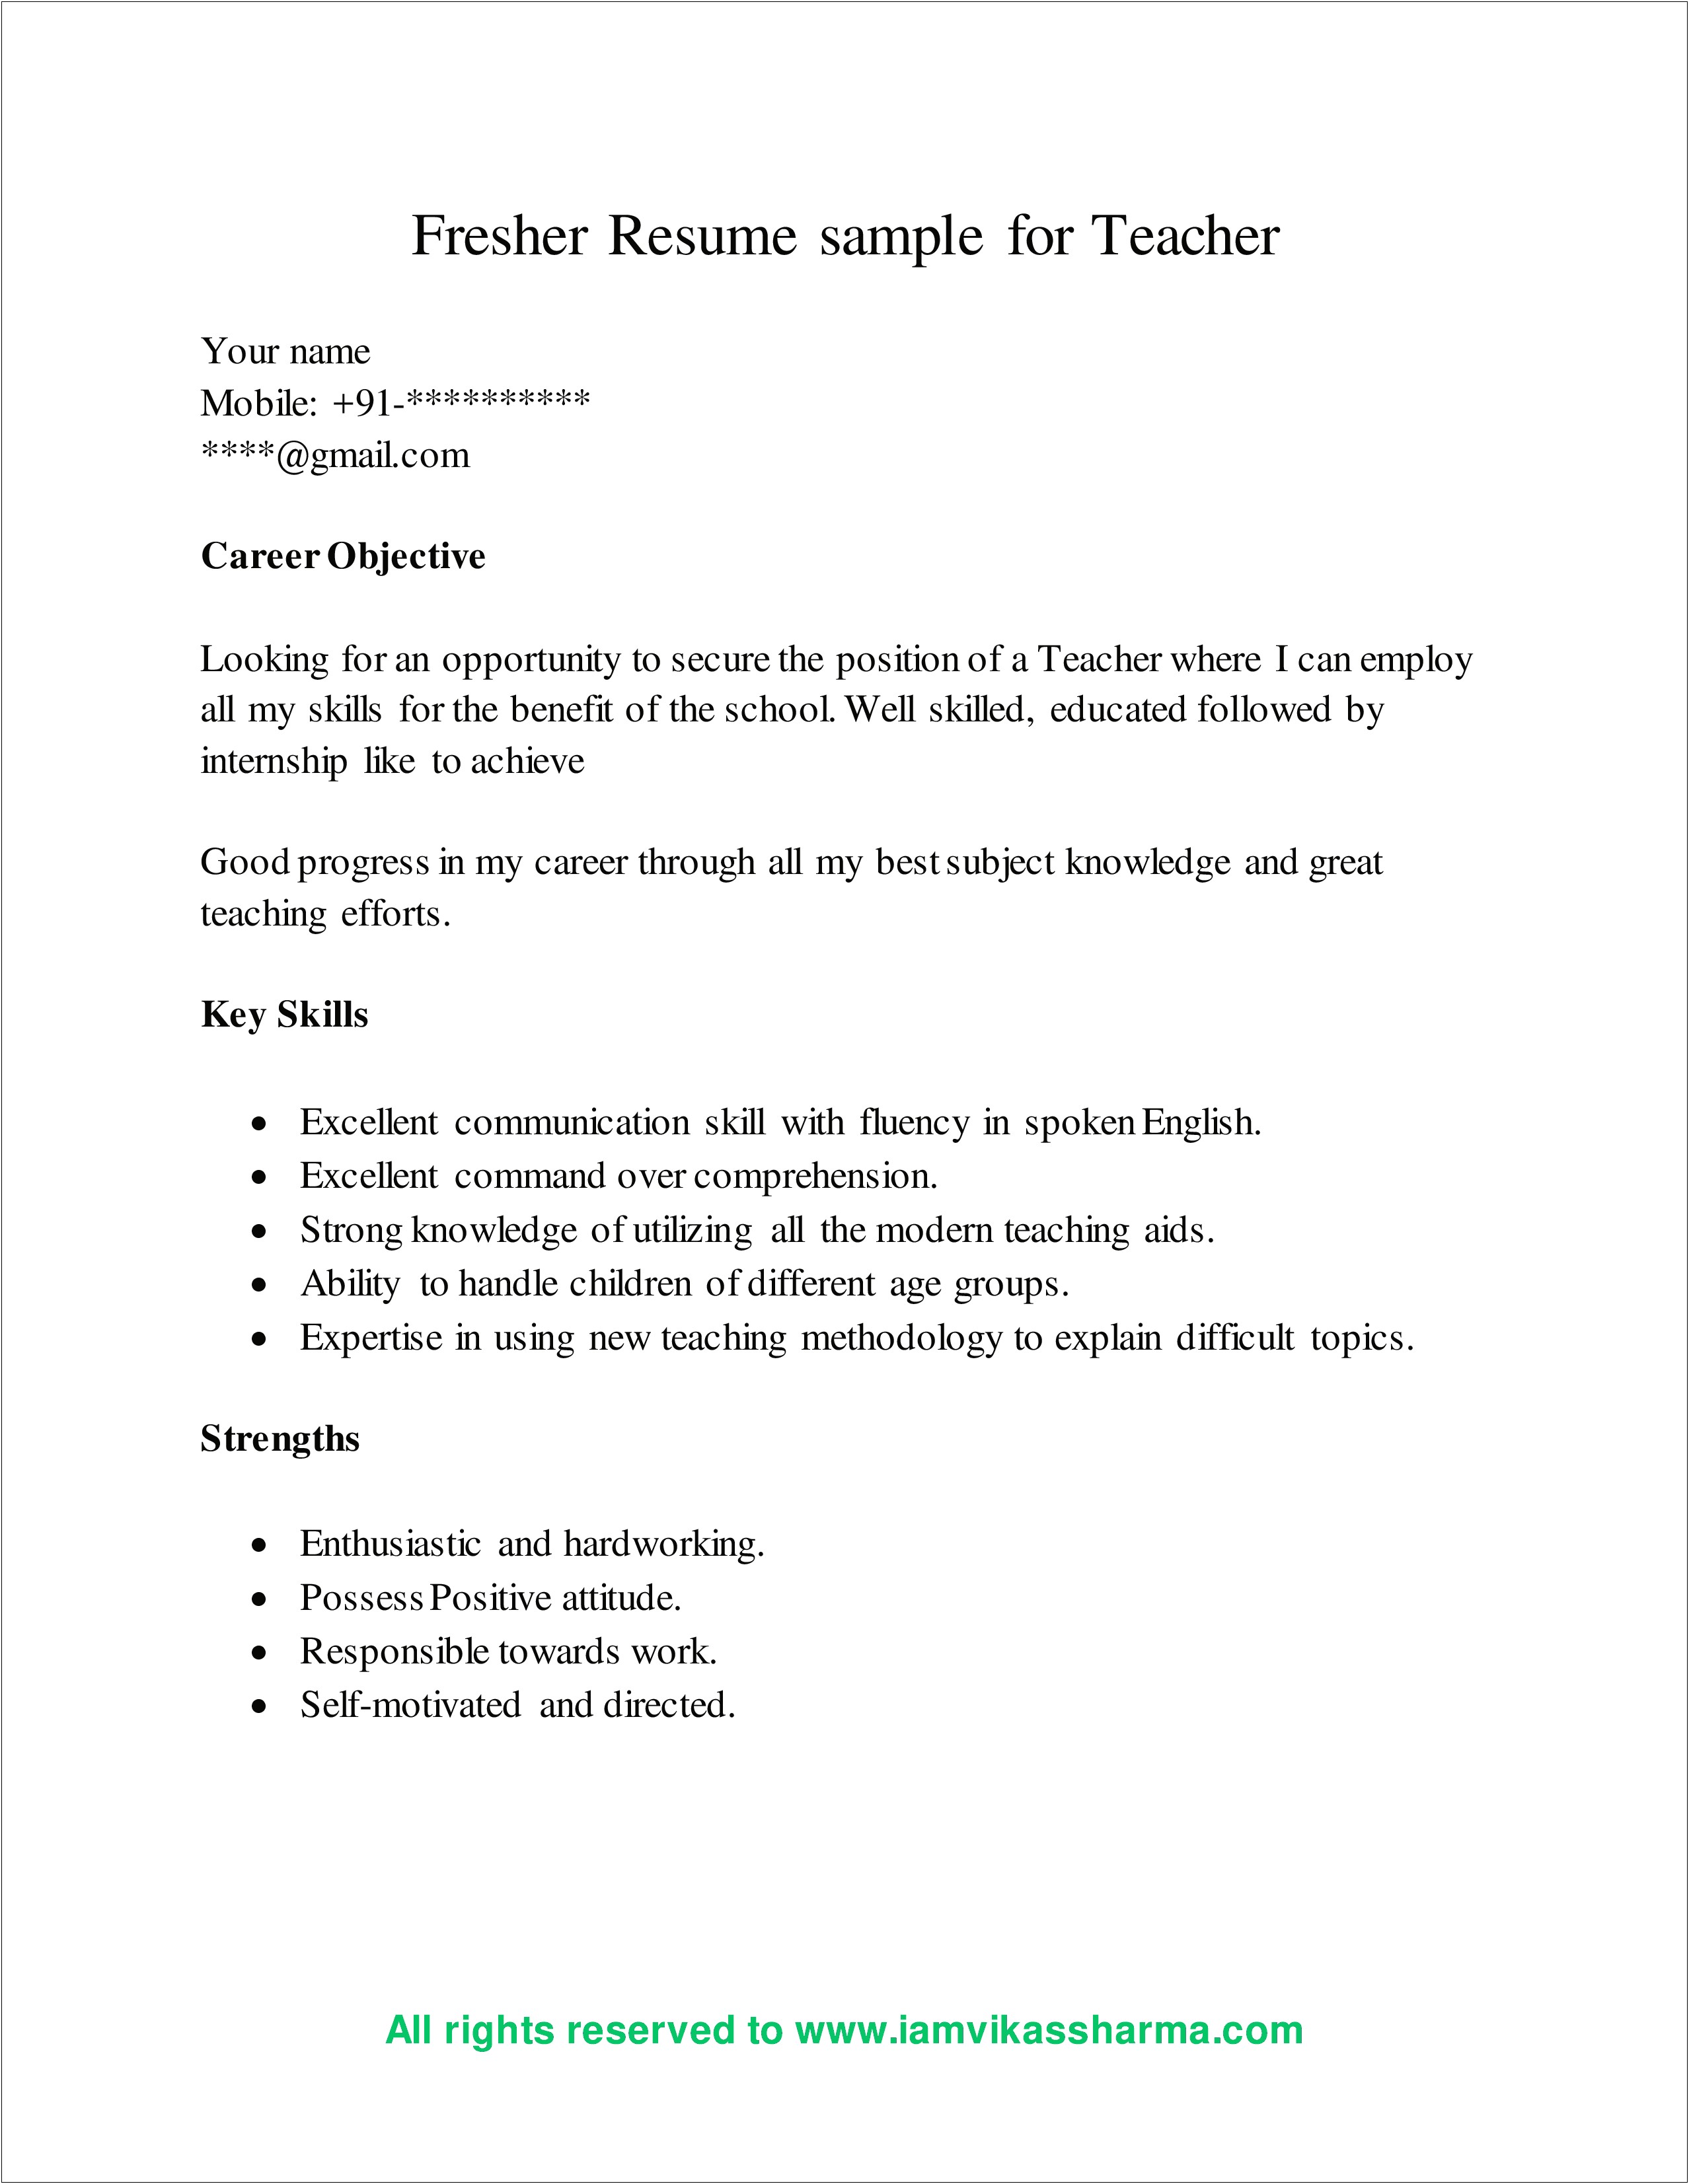 Resume Proforma For Teaching Job